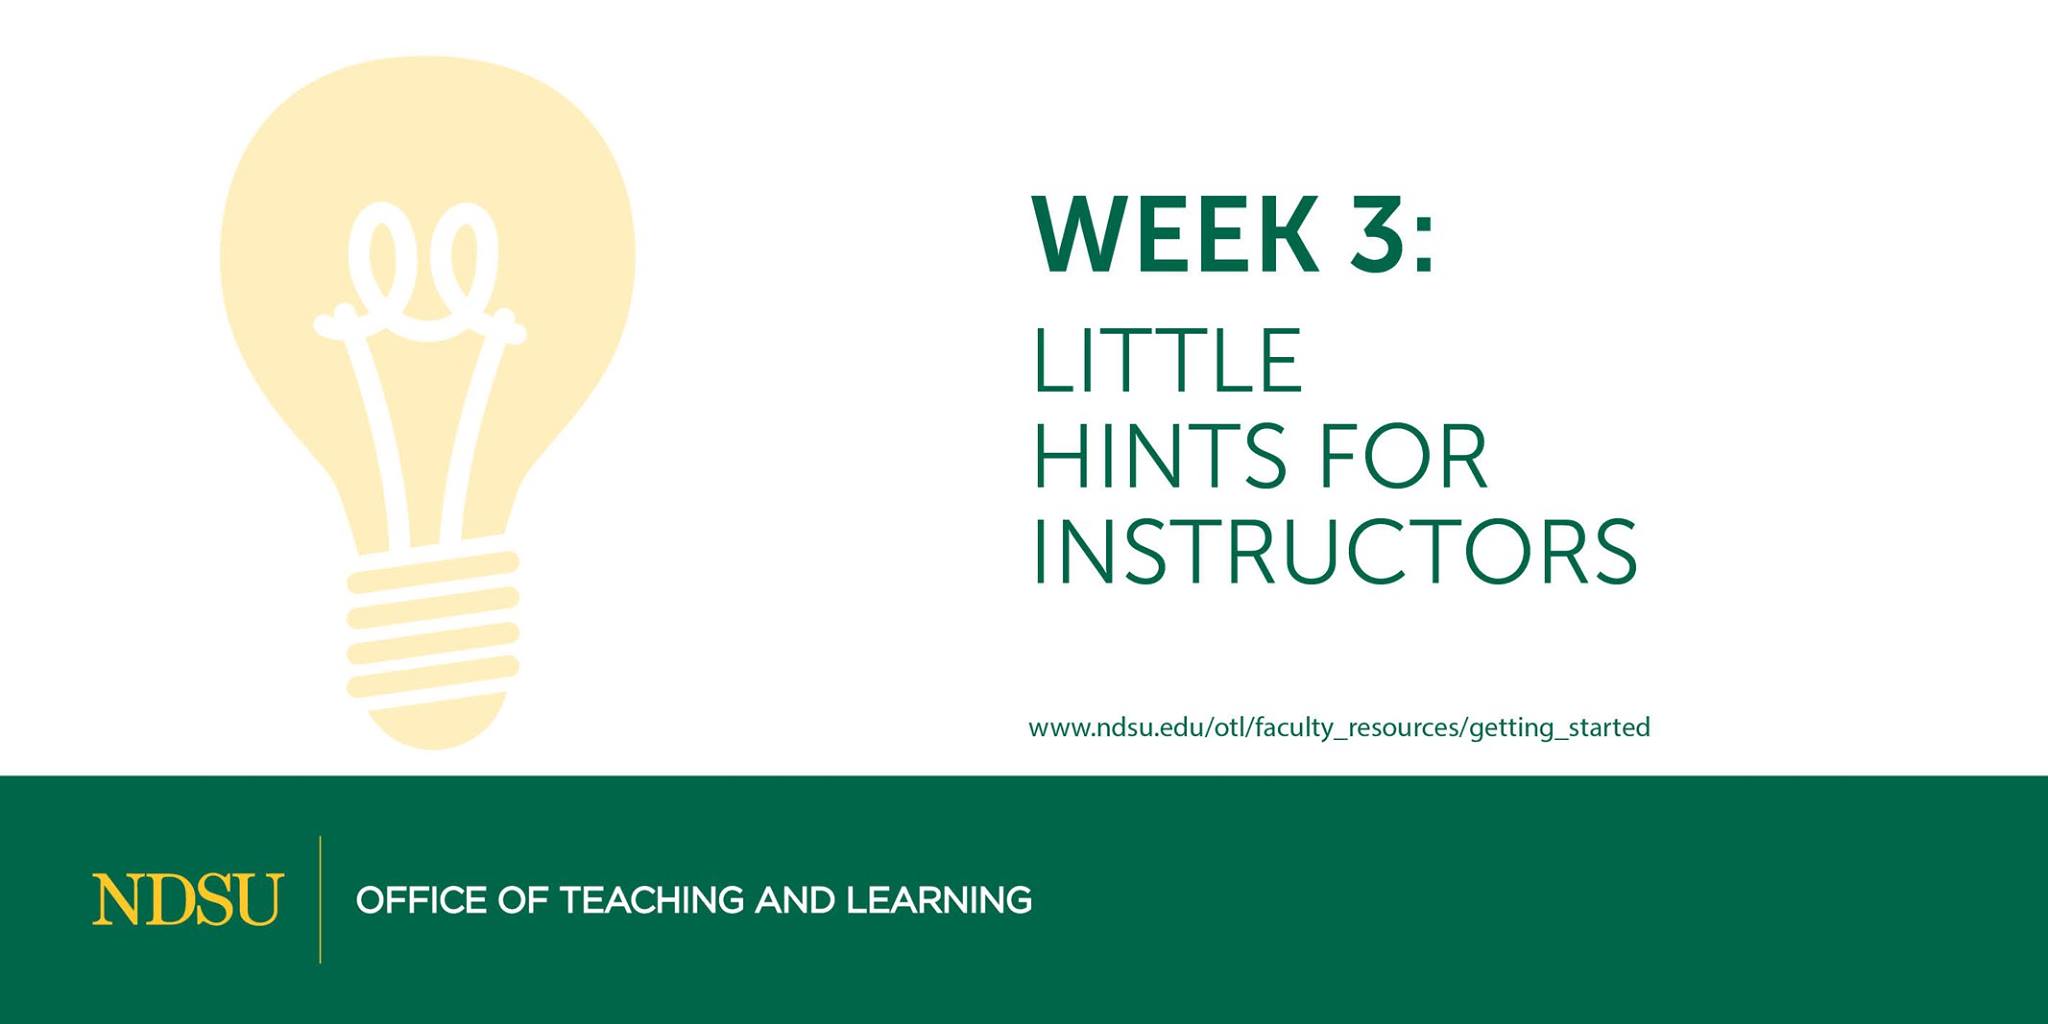 Week 3 Little Hints for Instructors